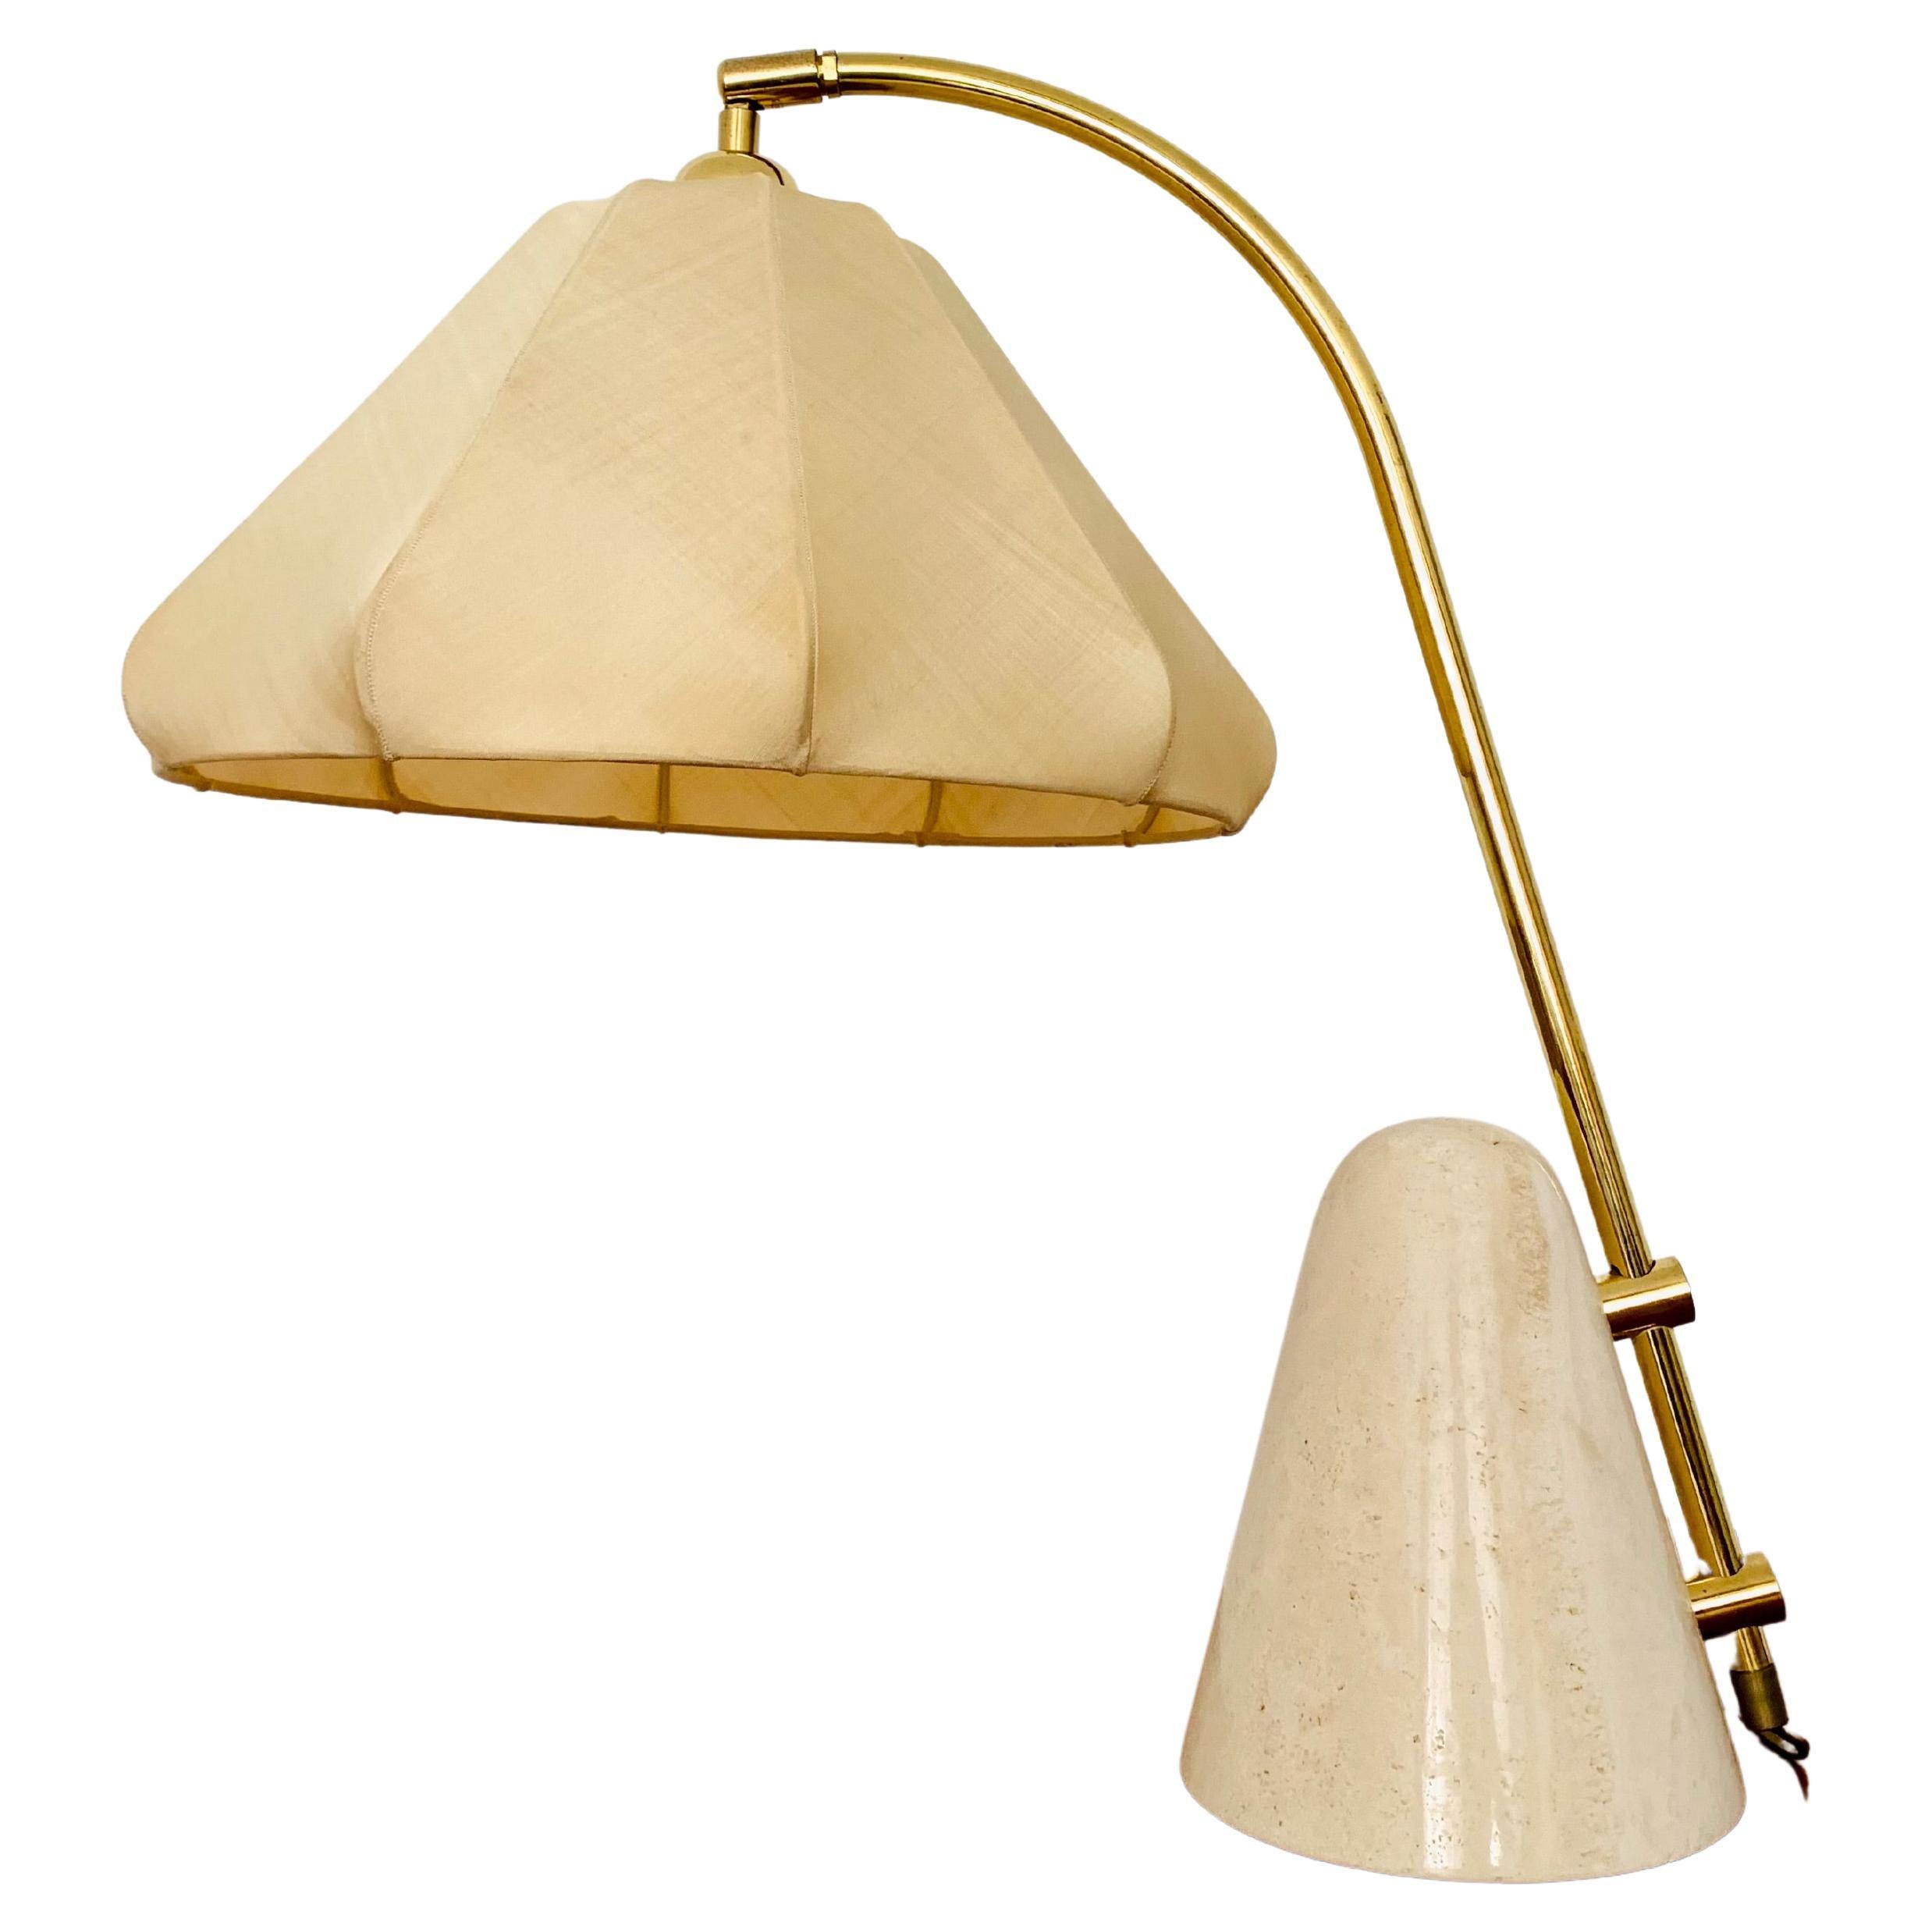 Travertin Table Lamp by Temde